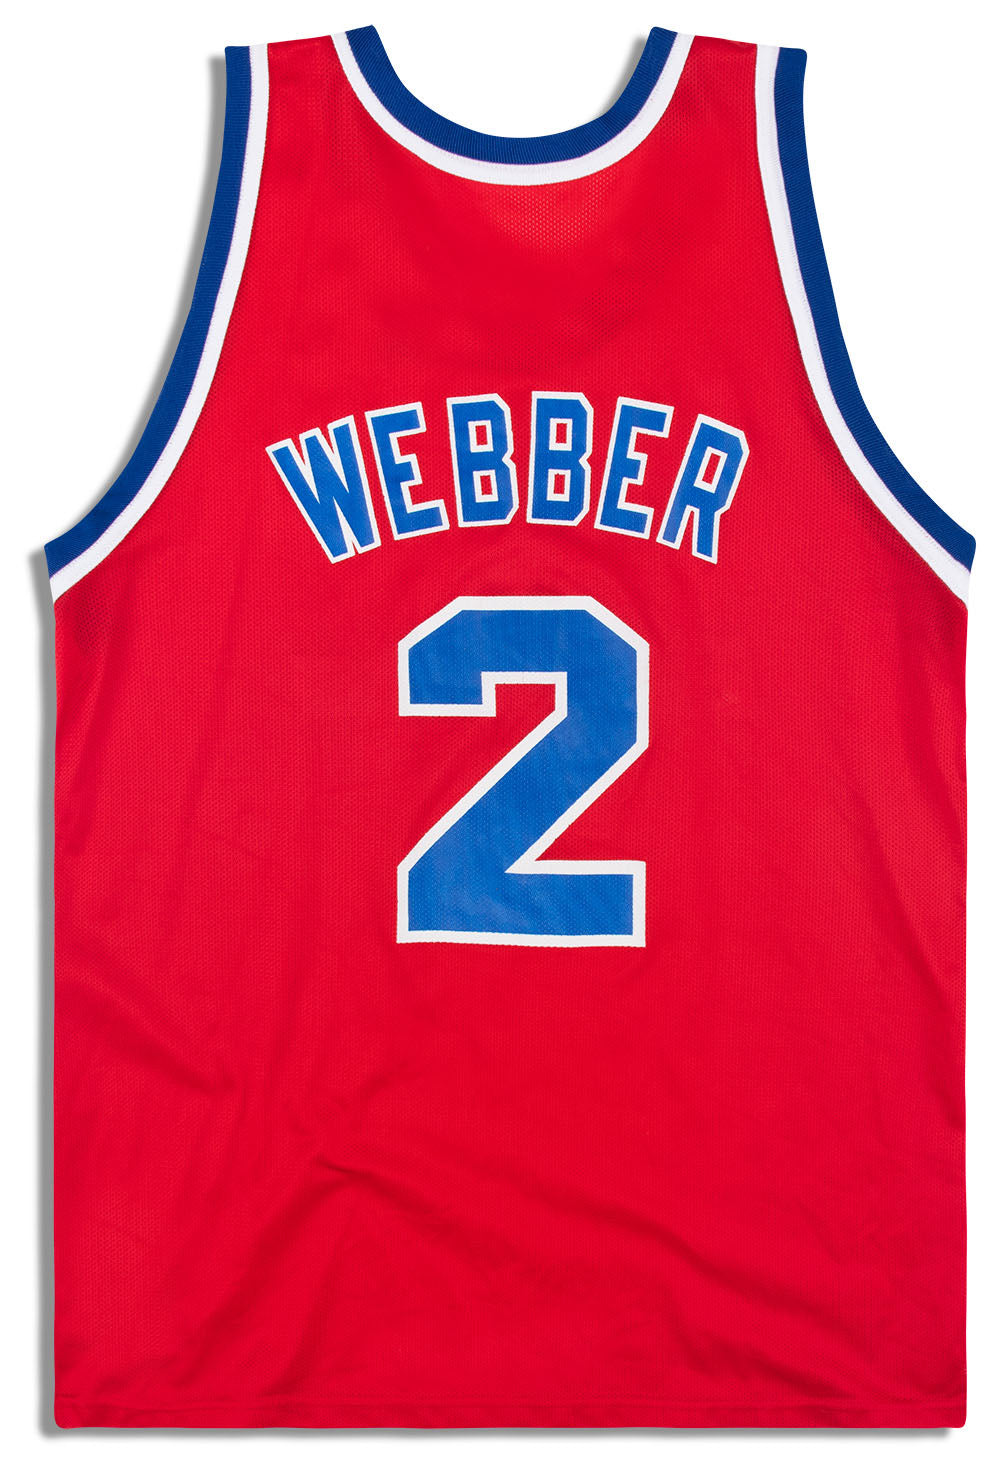 Webber's Official Washington Wizards Signed Jersey - CharityStars